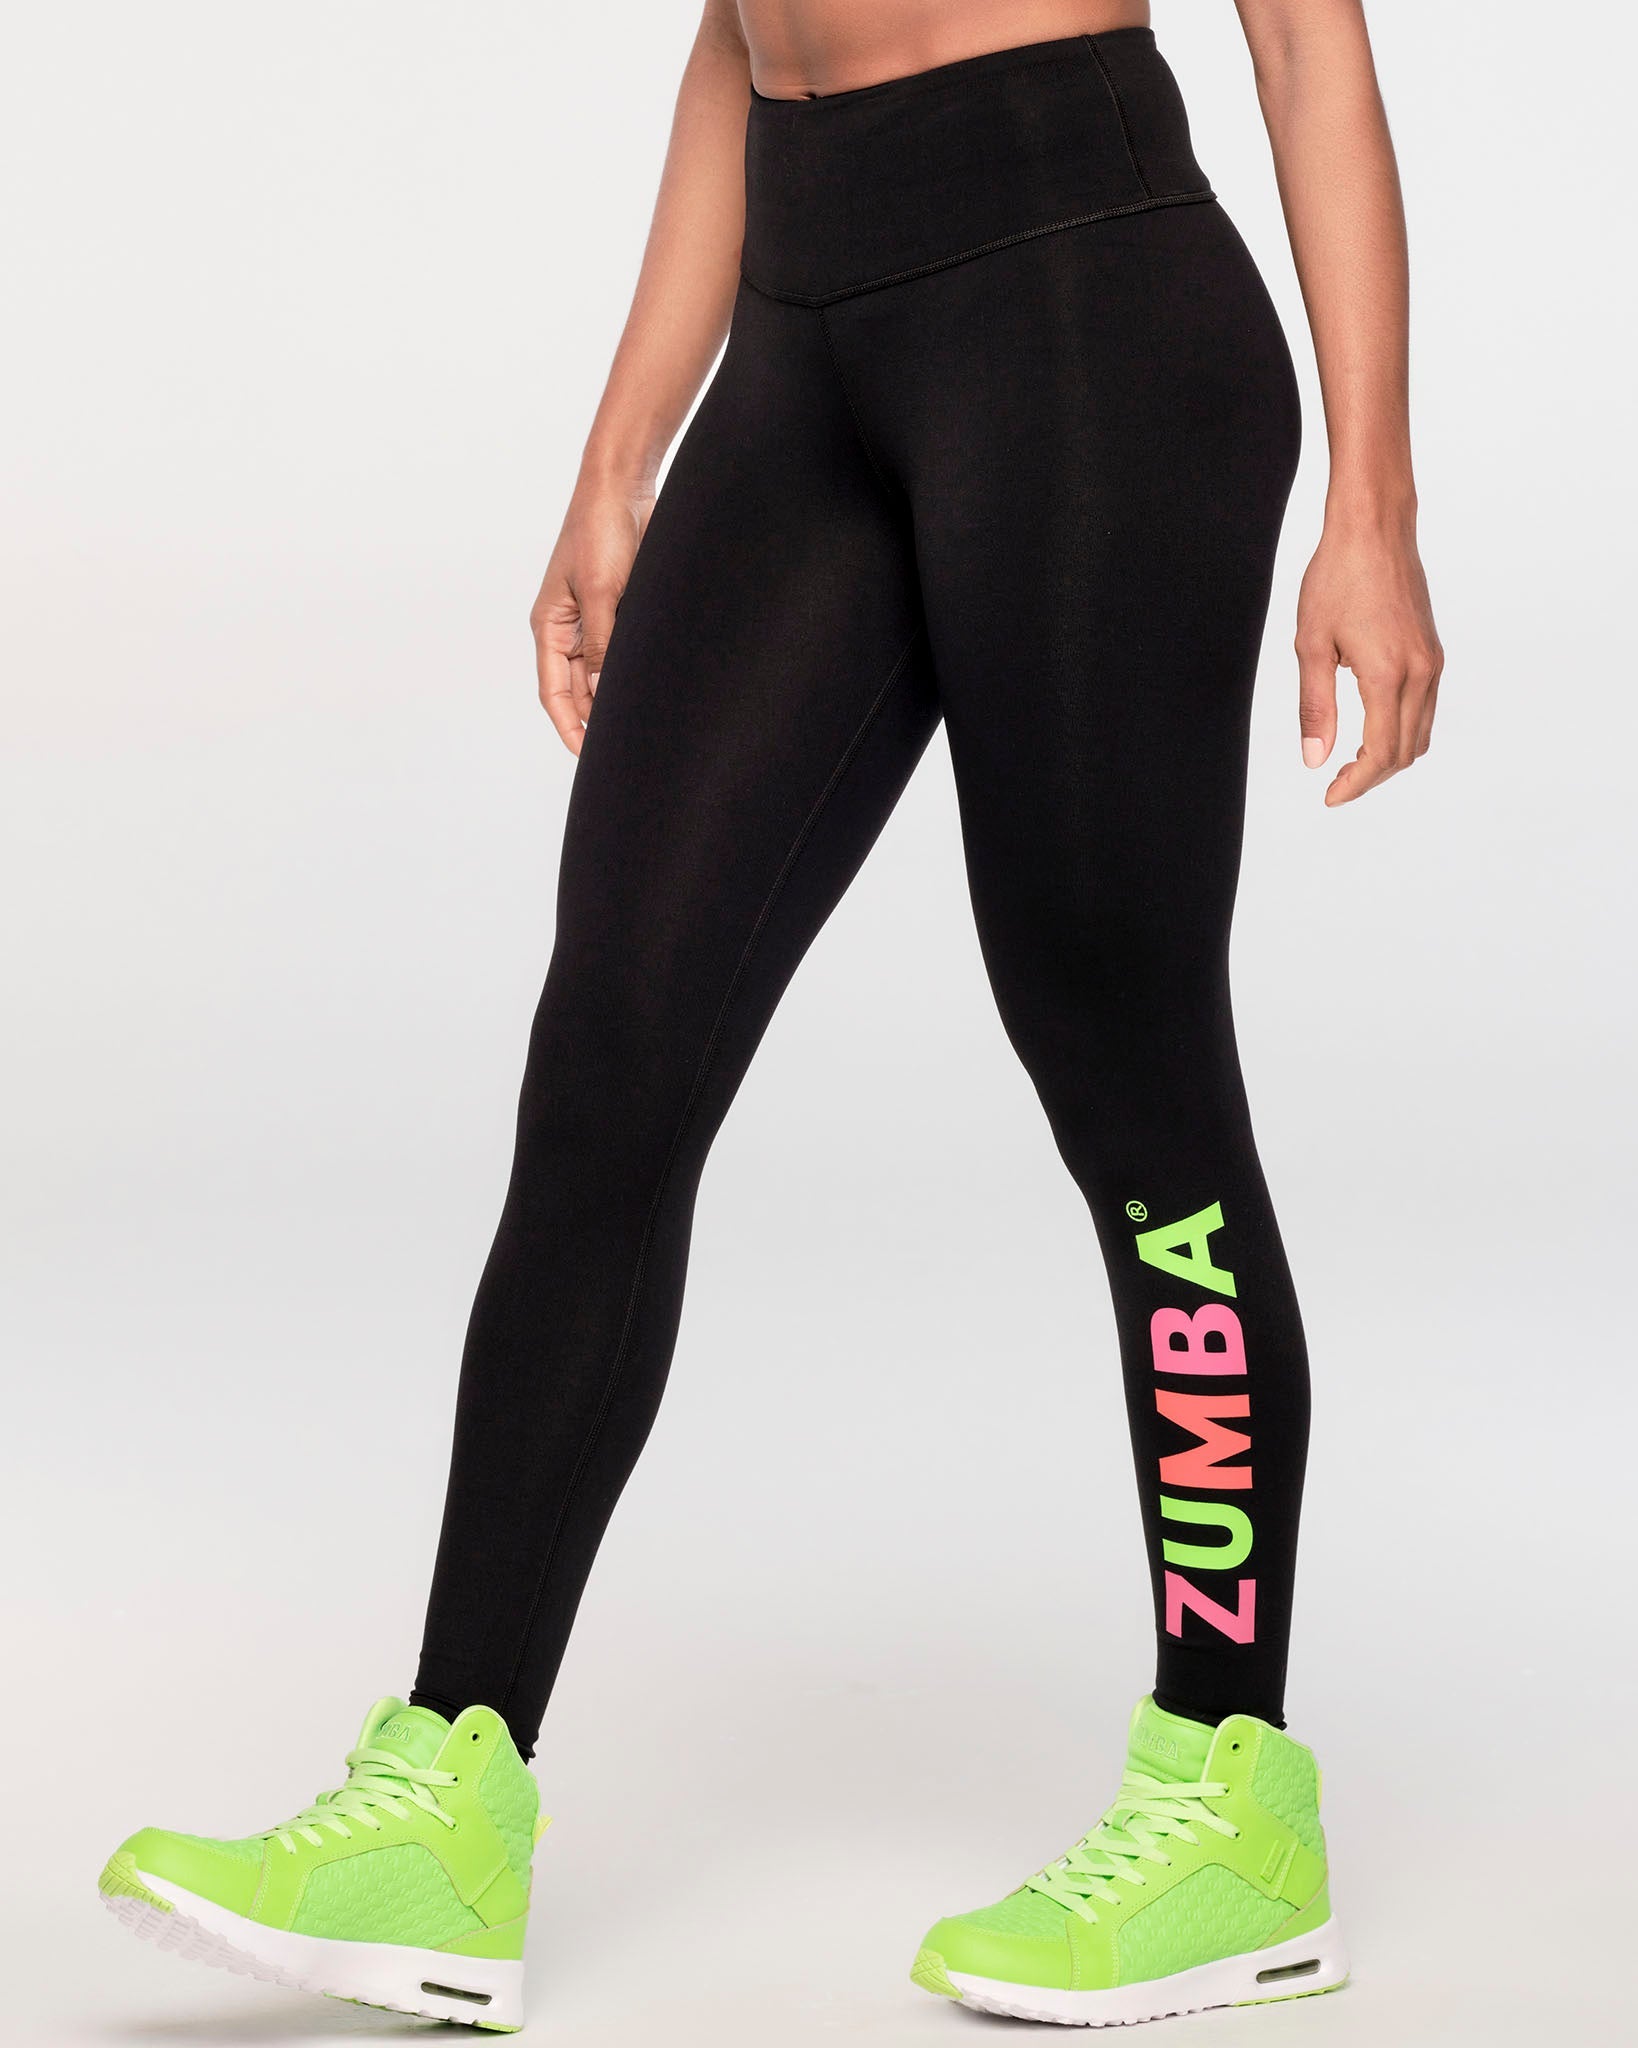 Jabari High-Waisted Leggings (Women's Yoga Sports Workout Pants in Black  Pink Green and Yellow African Pattern) - Chimzi